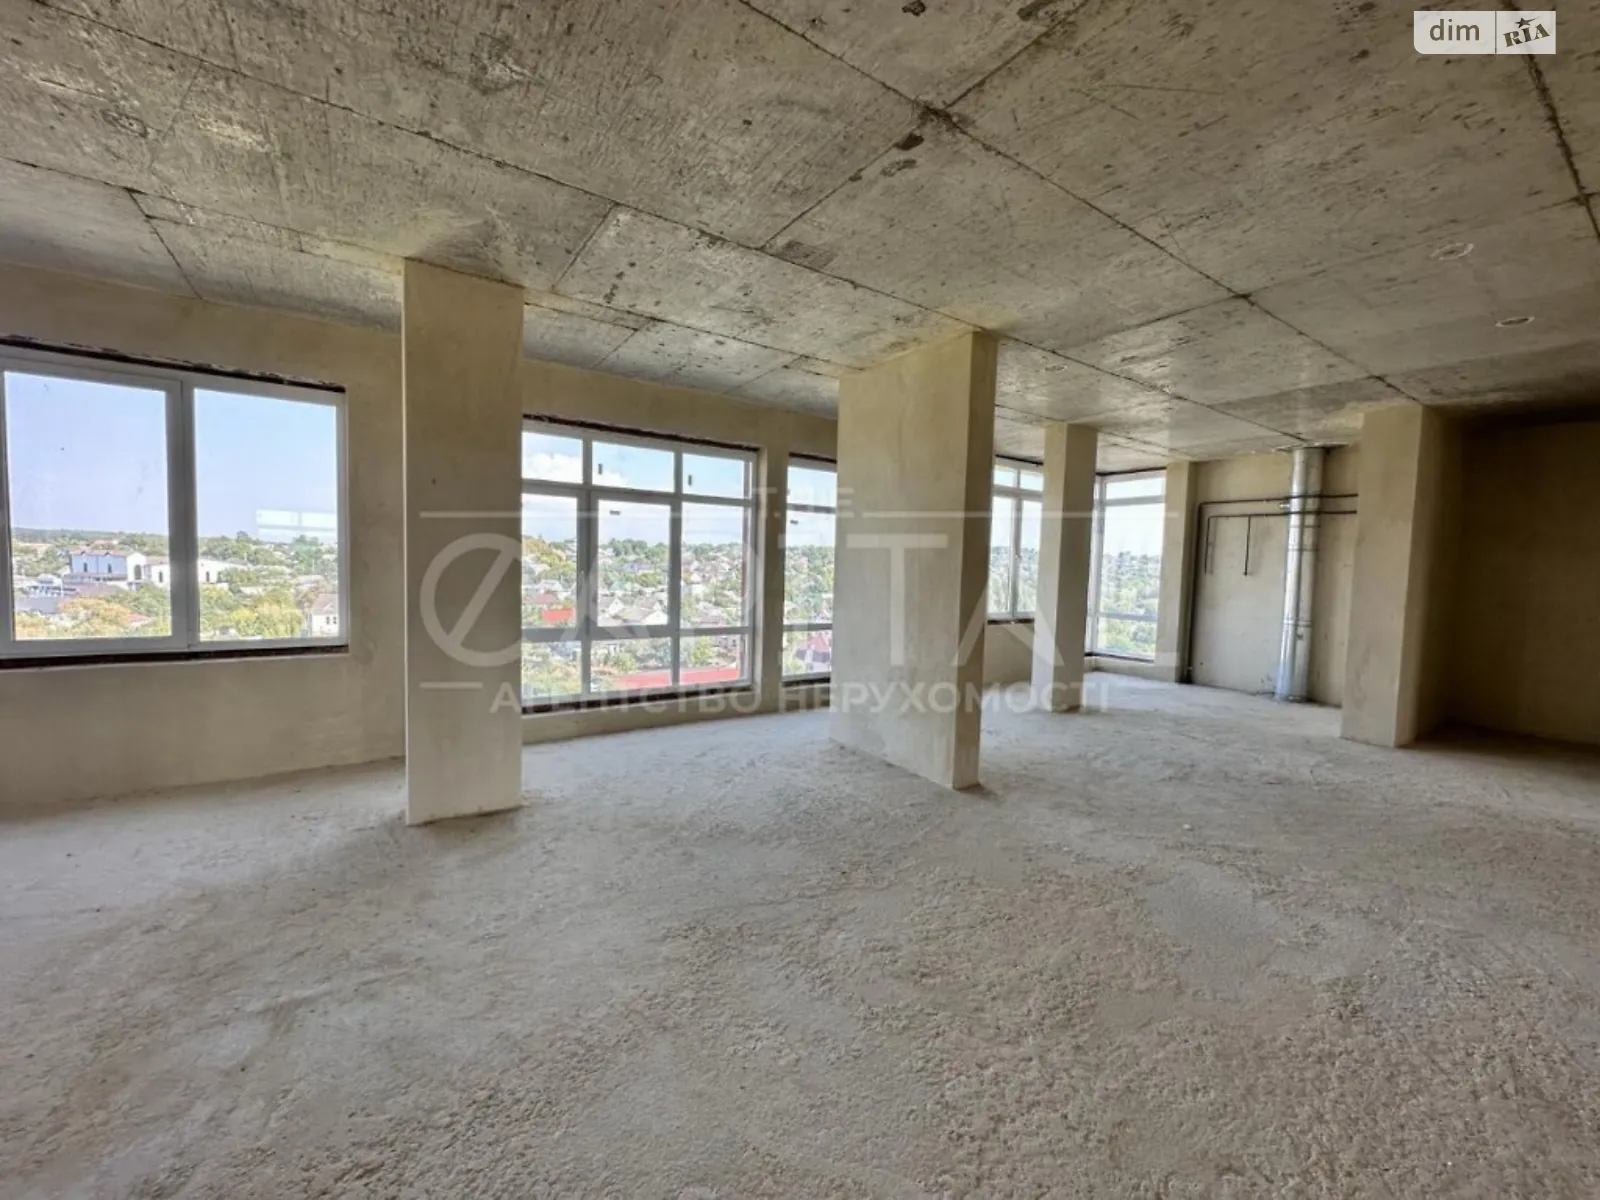 Продается 2-комнатная квартира 74.71 кв. м в Умани - фото 3